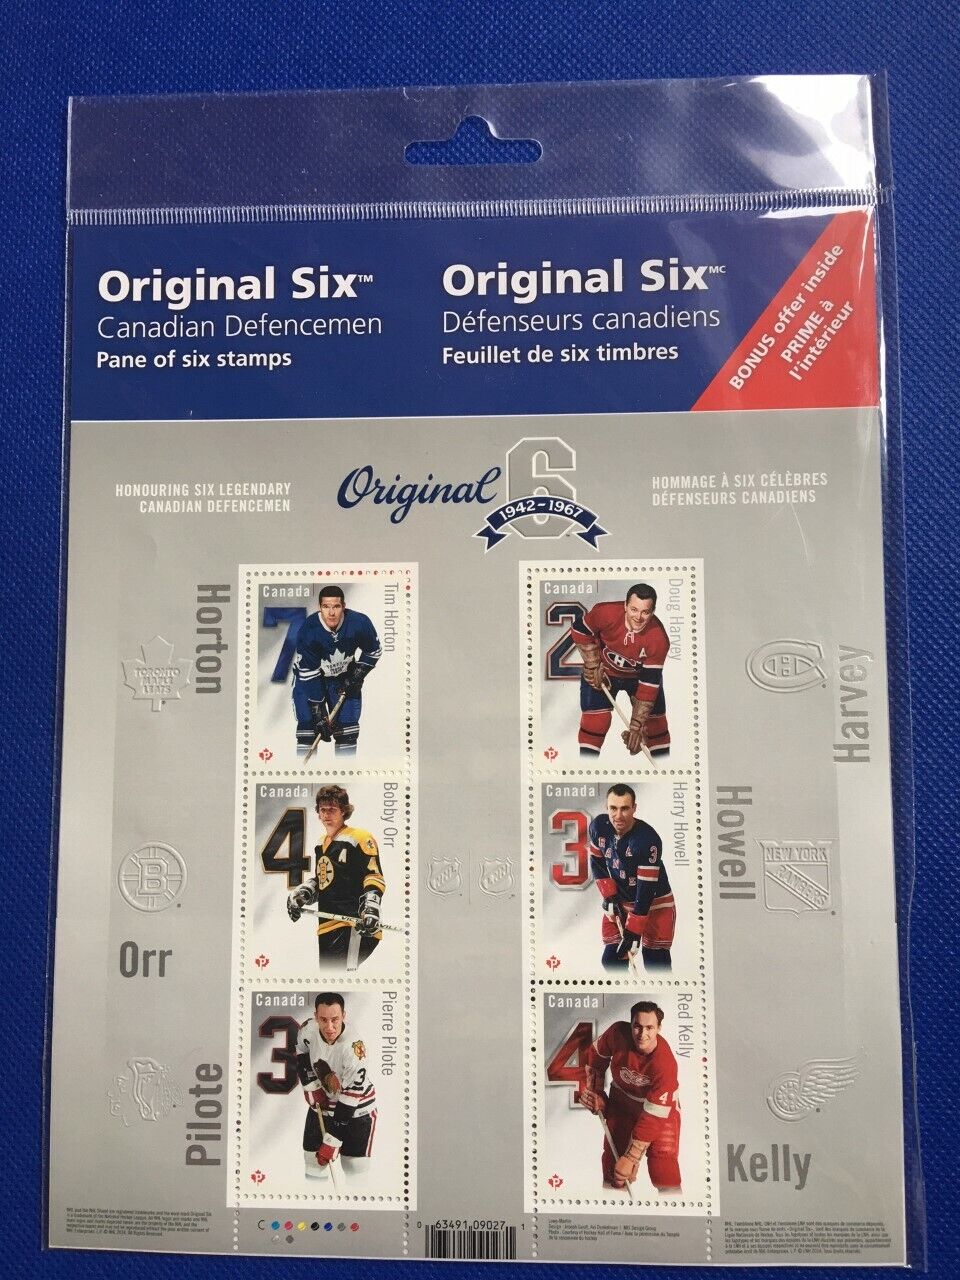 2014 Canada Original Six Canadian Defencemen Pane of 6p Stamps Original Sealed